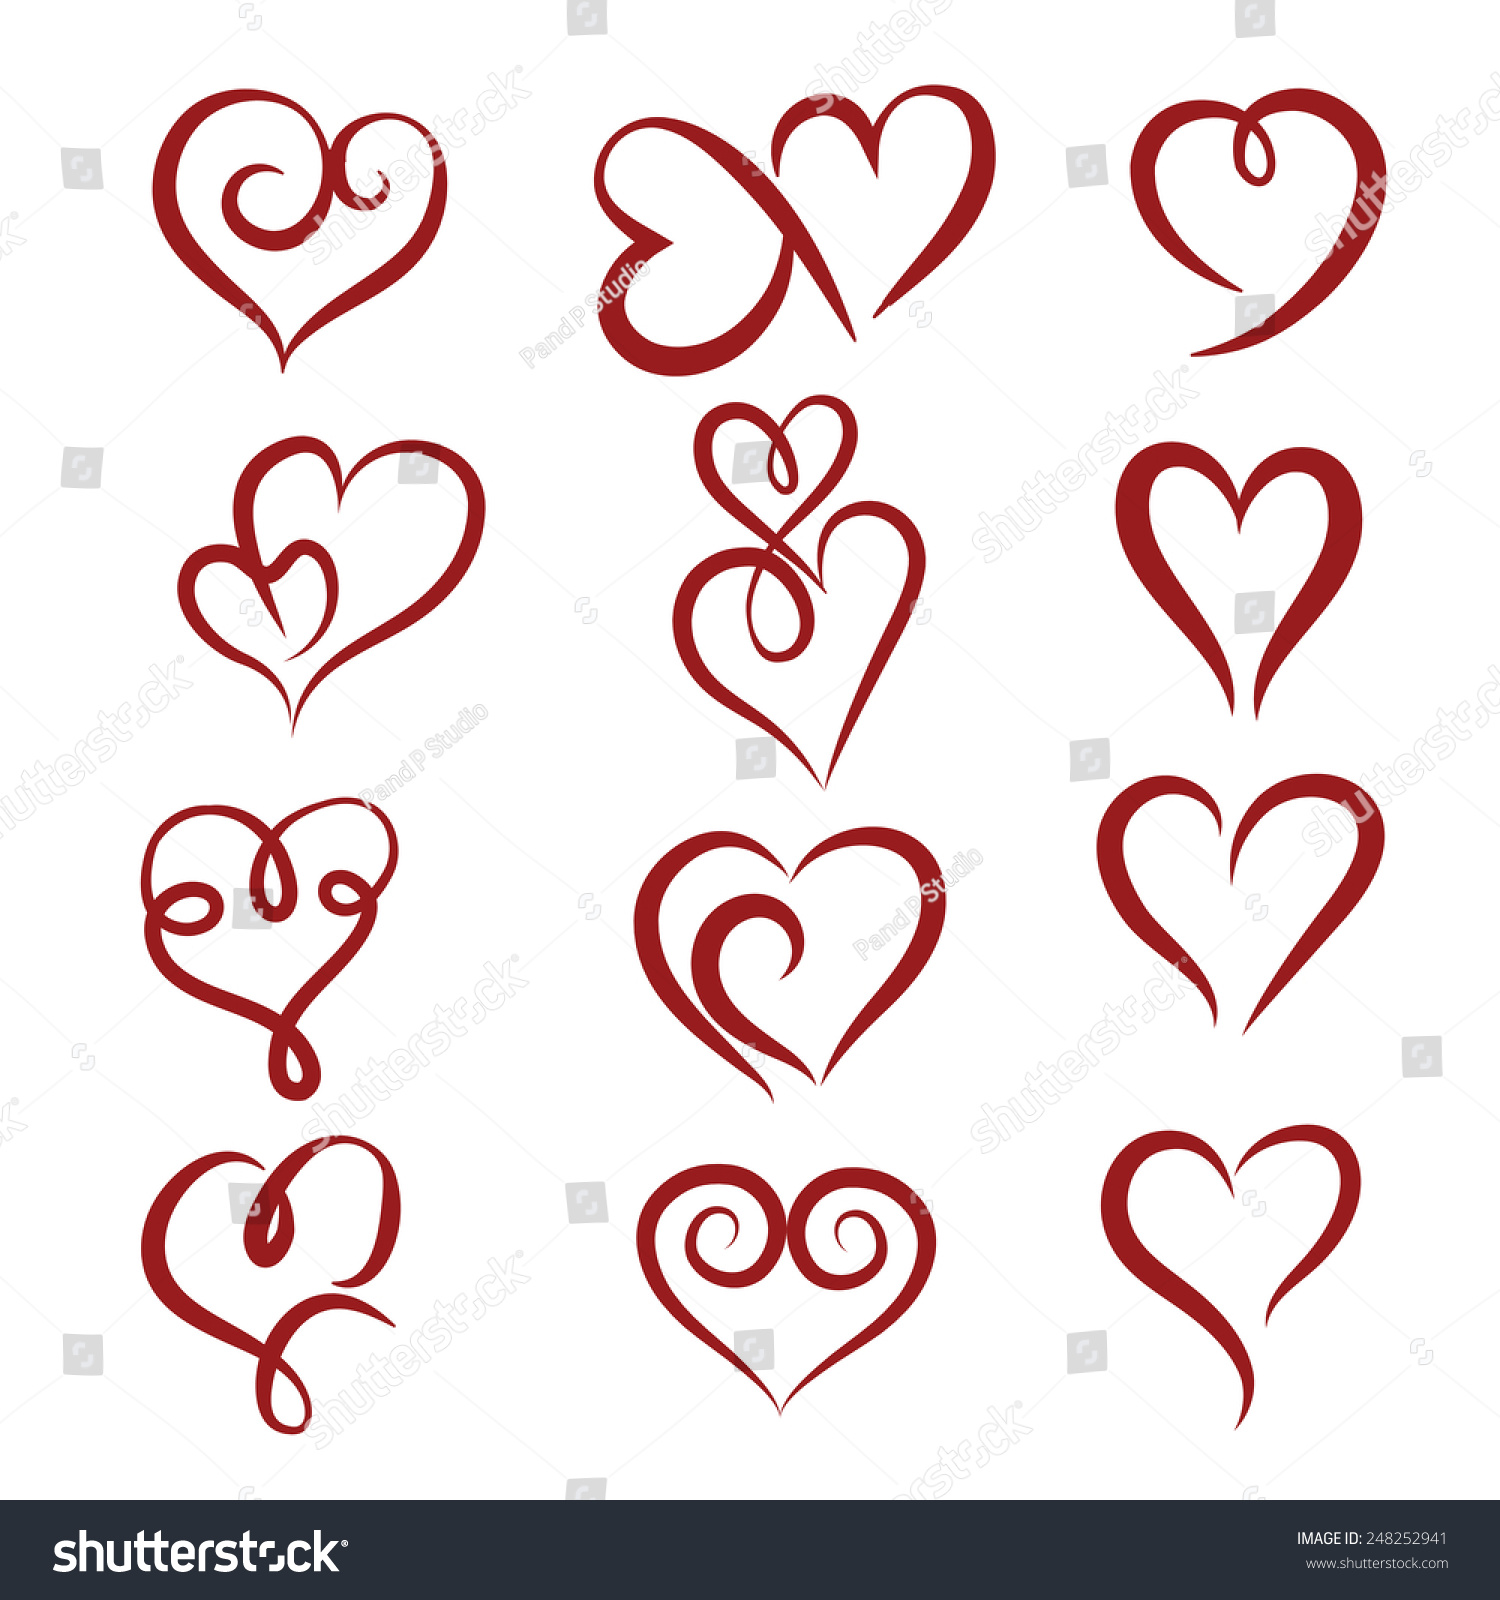 download heart symbol illustrator